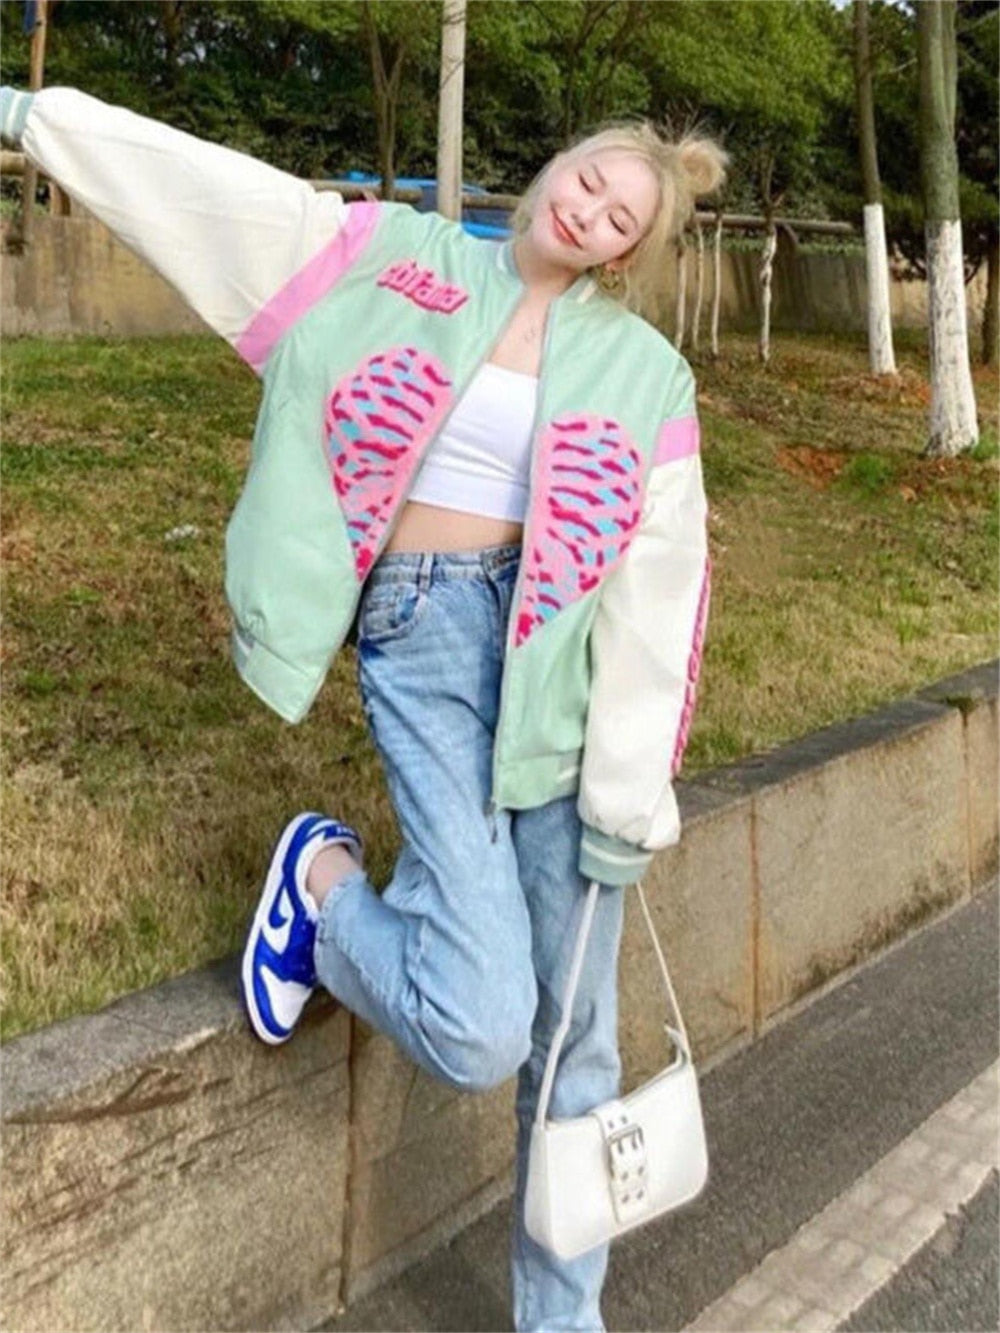 Mojoyce Kawaii Heart Anime Hoodies Zipper Print Cardigan Jacket Harajuku Korean Funny Cute Sweatshirt Alt Girl Y2K Fleece Hoodie Jackets